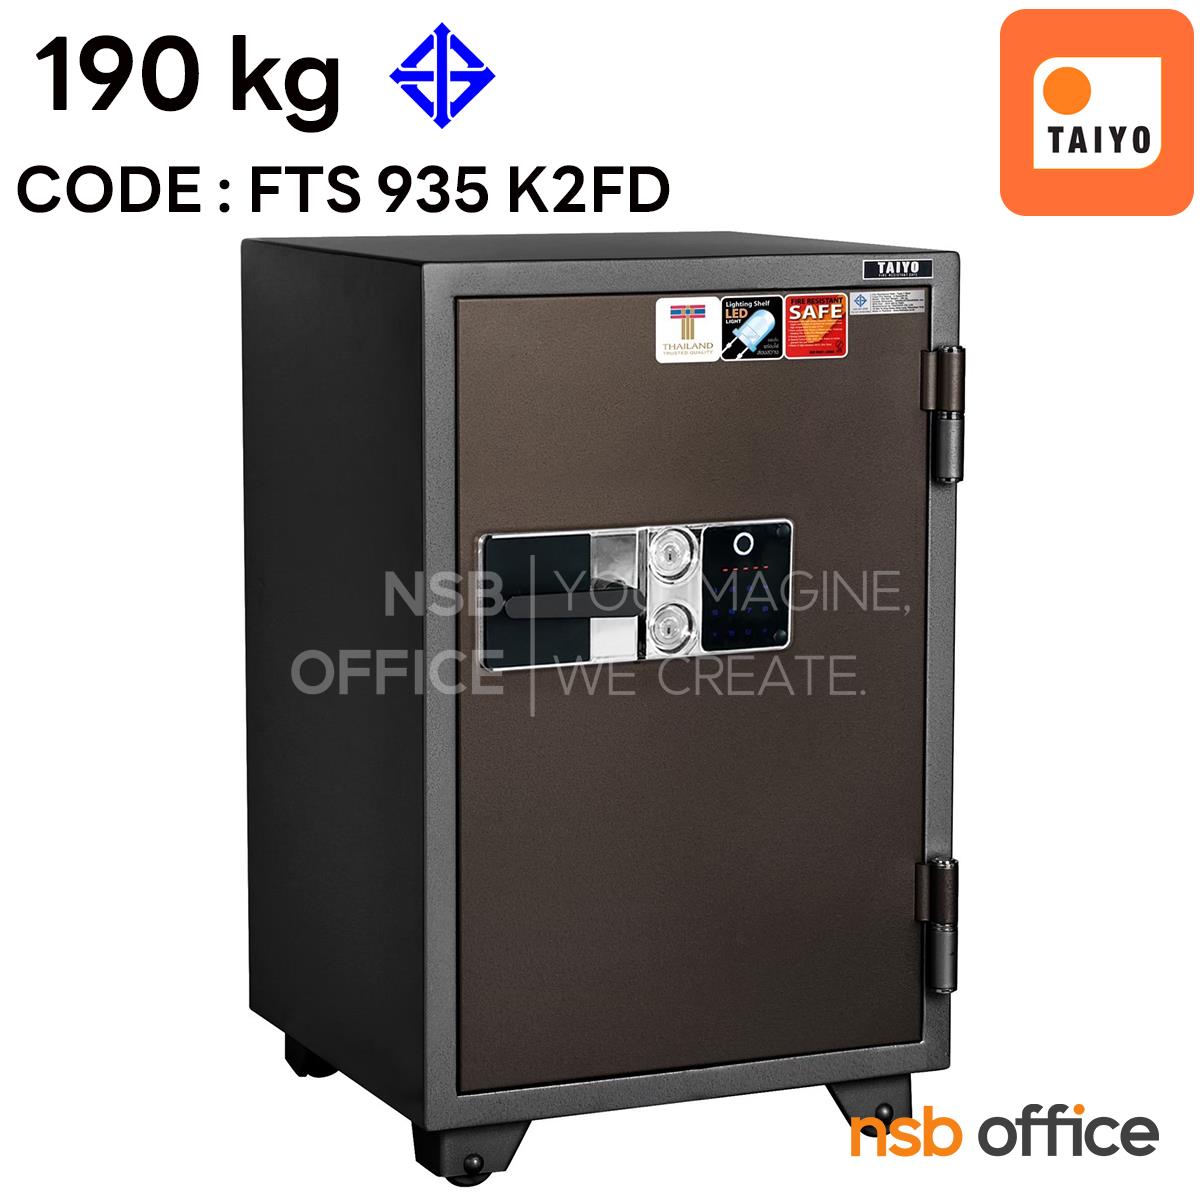 F01A079:ตู้เซฟ Taiyo 190 กก. 2 กุญแจ 1 รหัส (FTS 935 K2FD)   